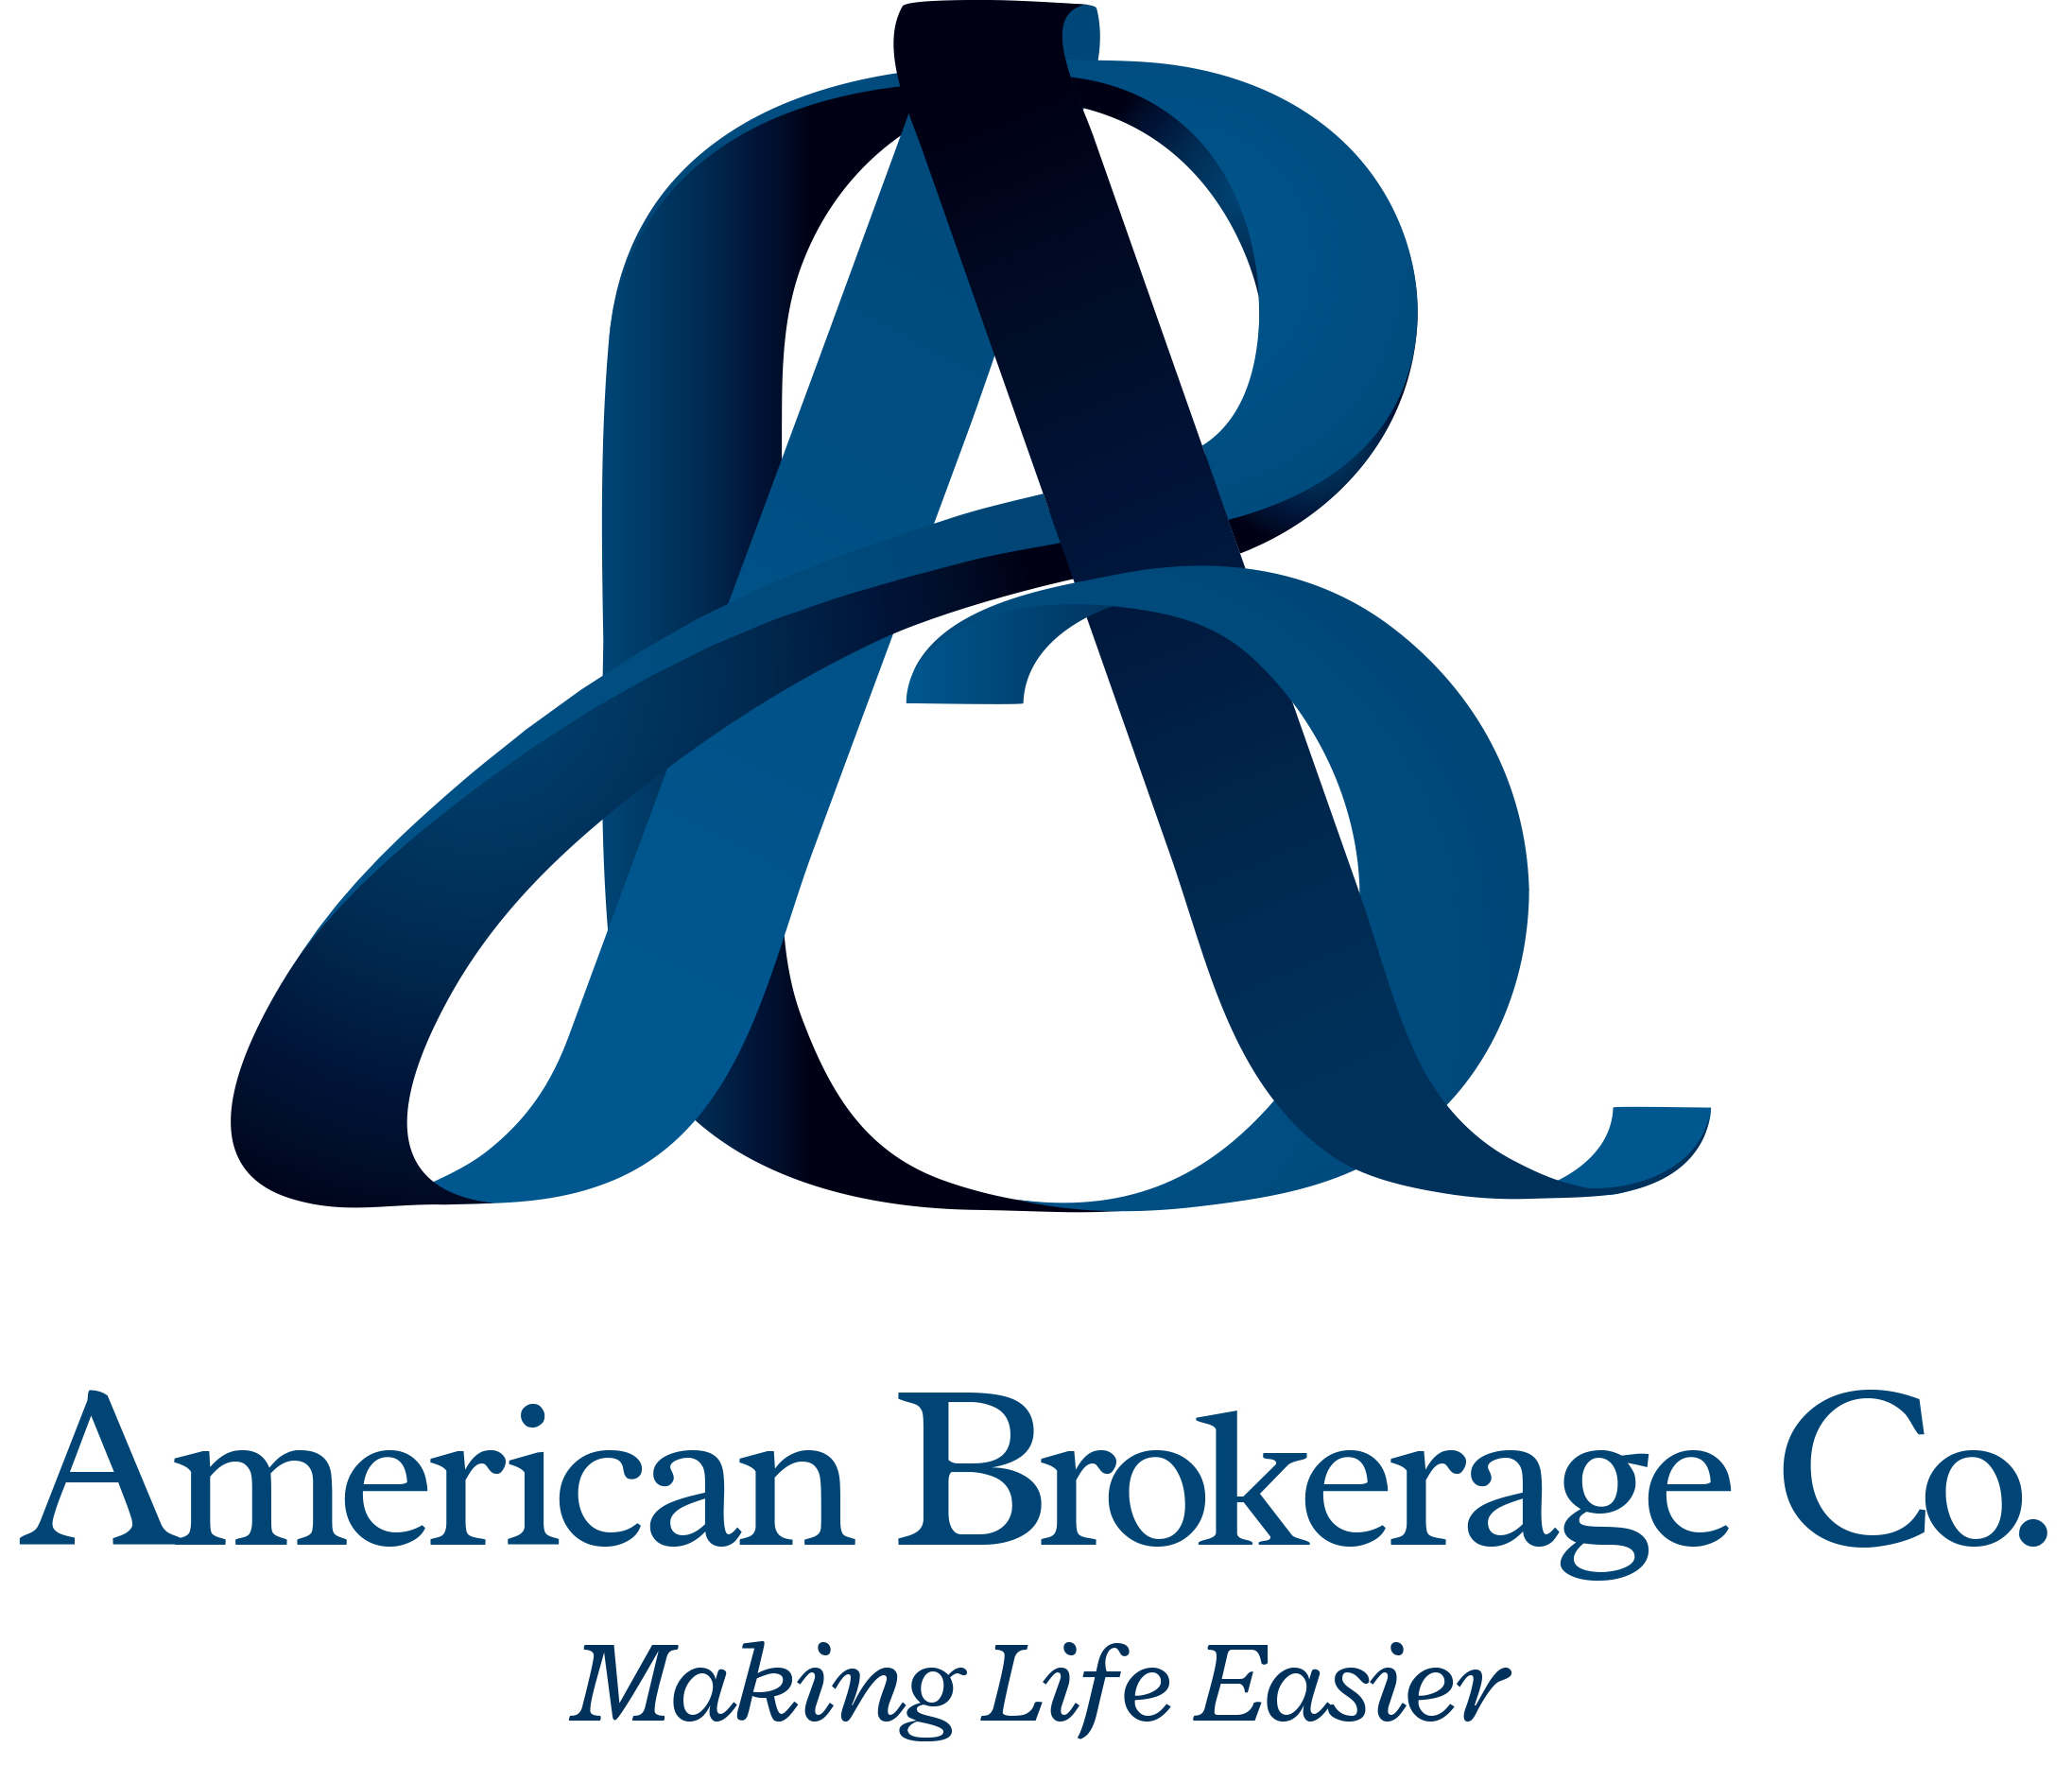 45 - American Brokerage Co.